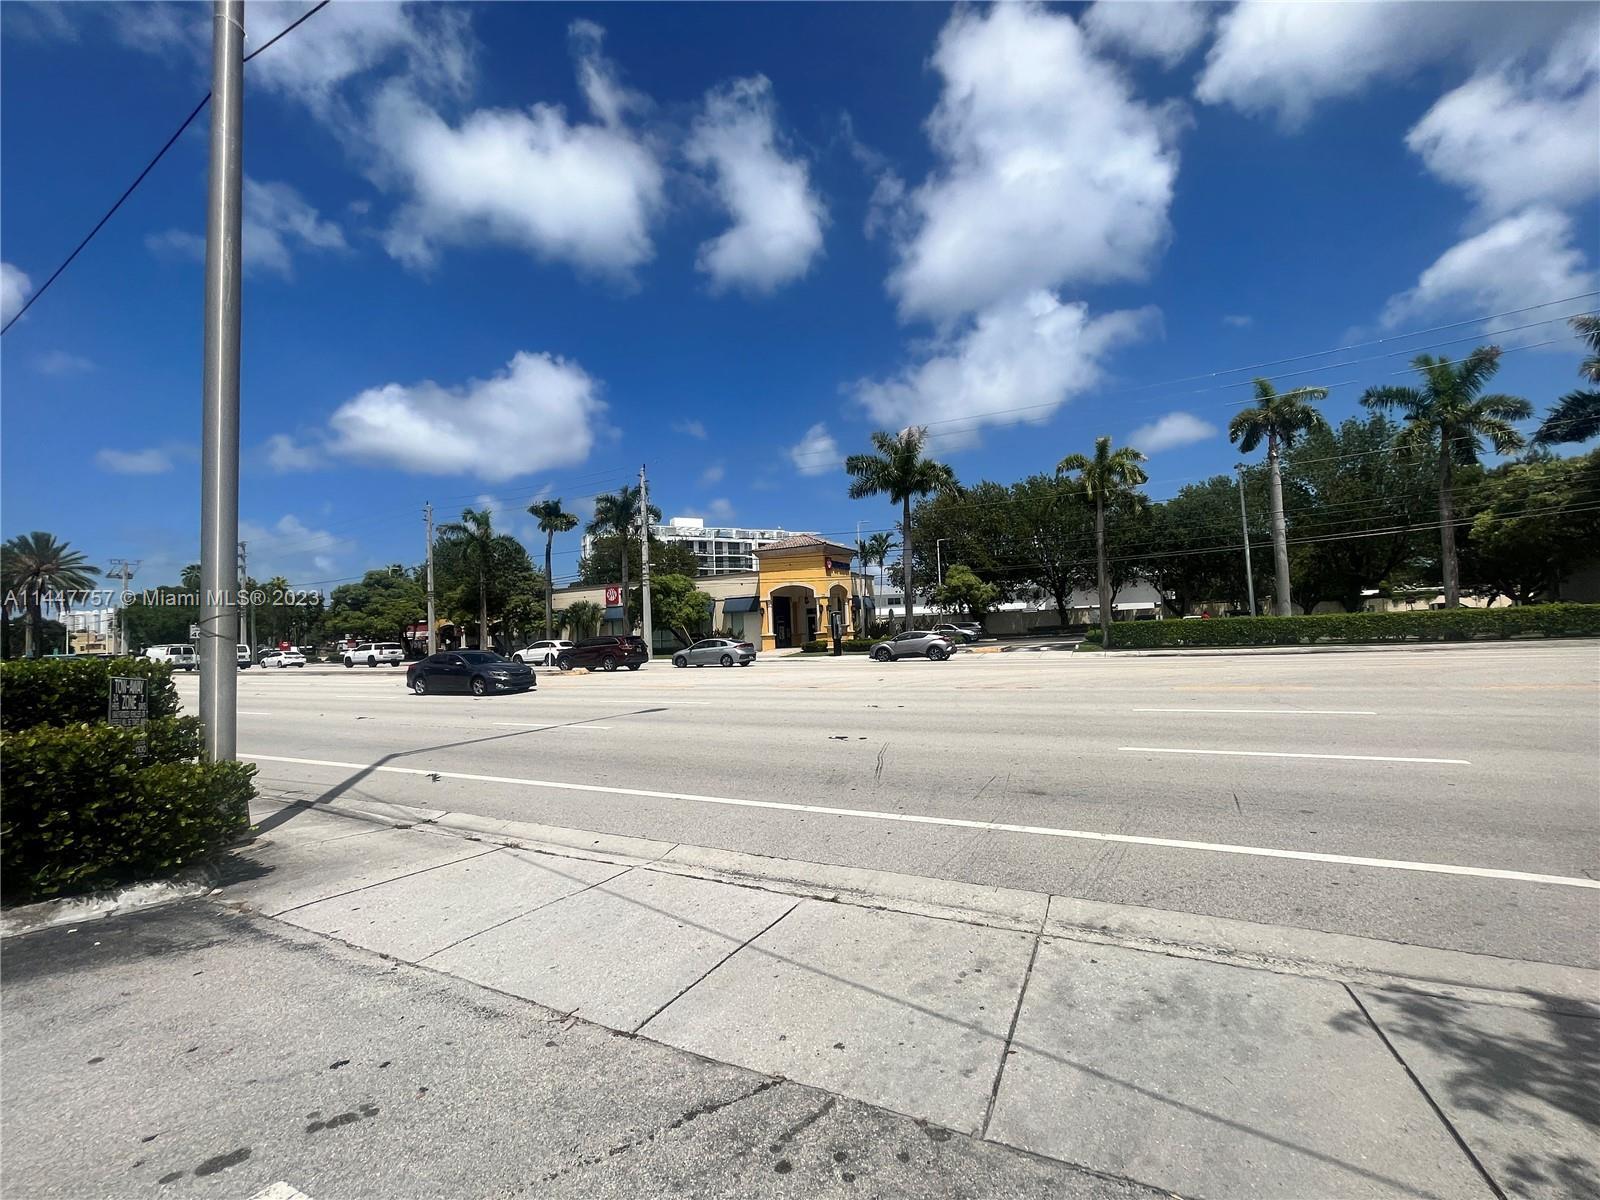 Photo of 13728 Biscayne Blvd in North Miami, FL